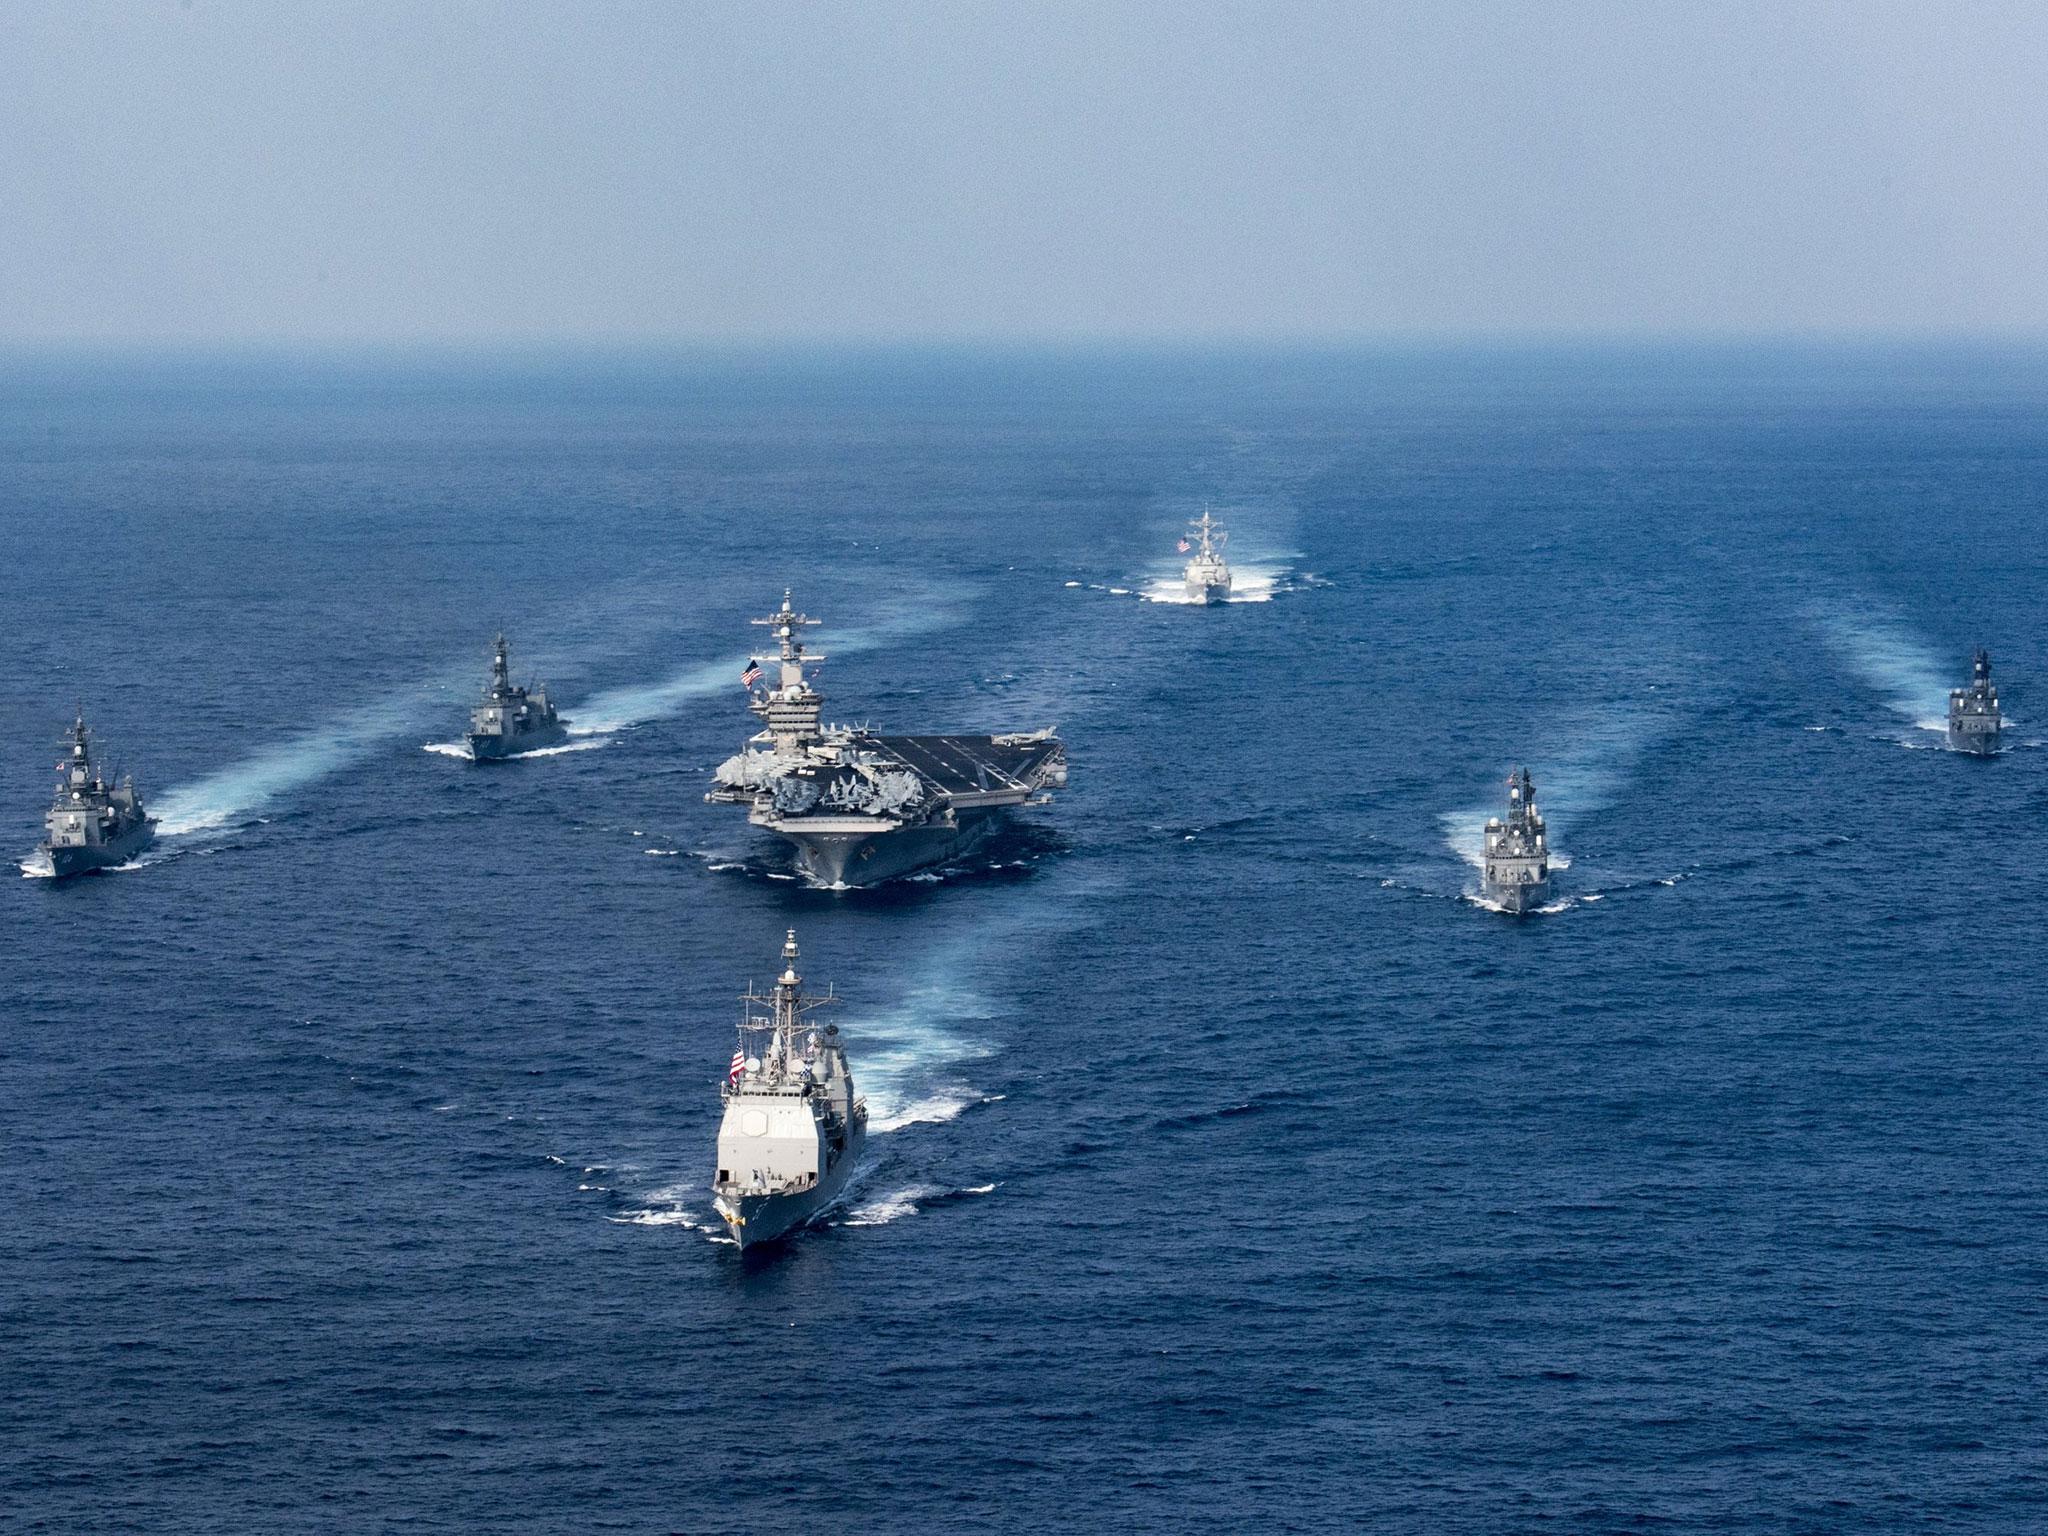 The US fleet being sent to North Korean waters